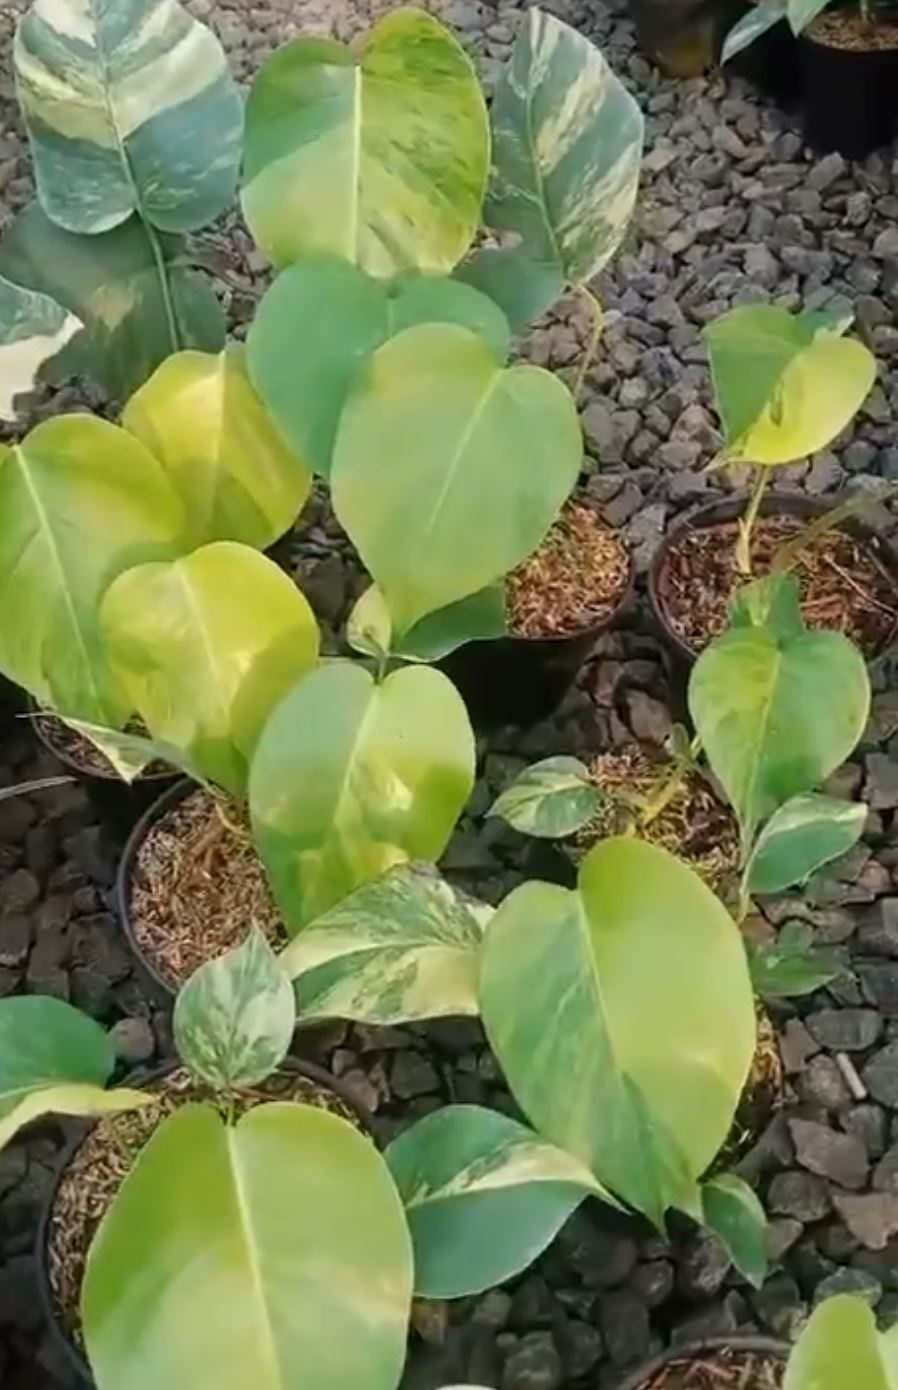 Monstera deliciosa "Aurea Marmorata" variegated Small 1-2 Leaf